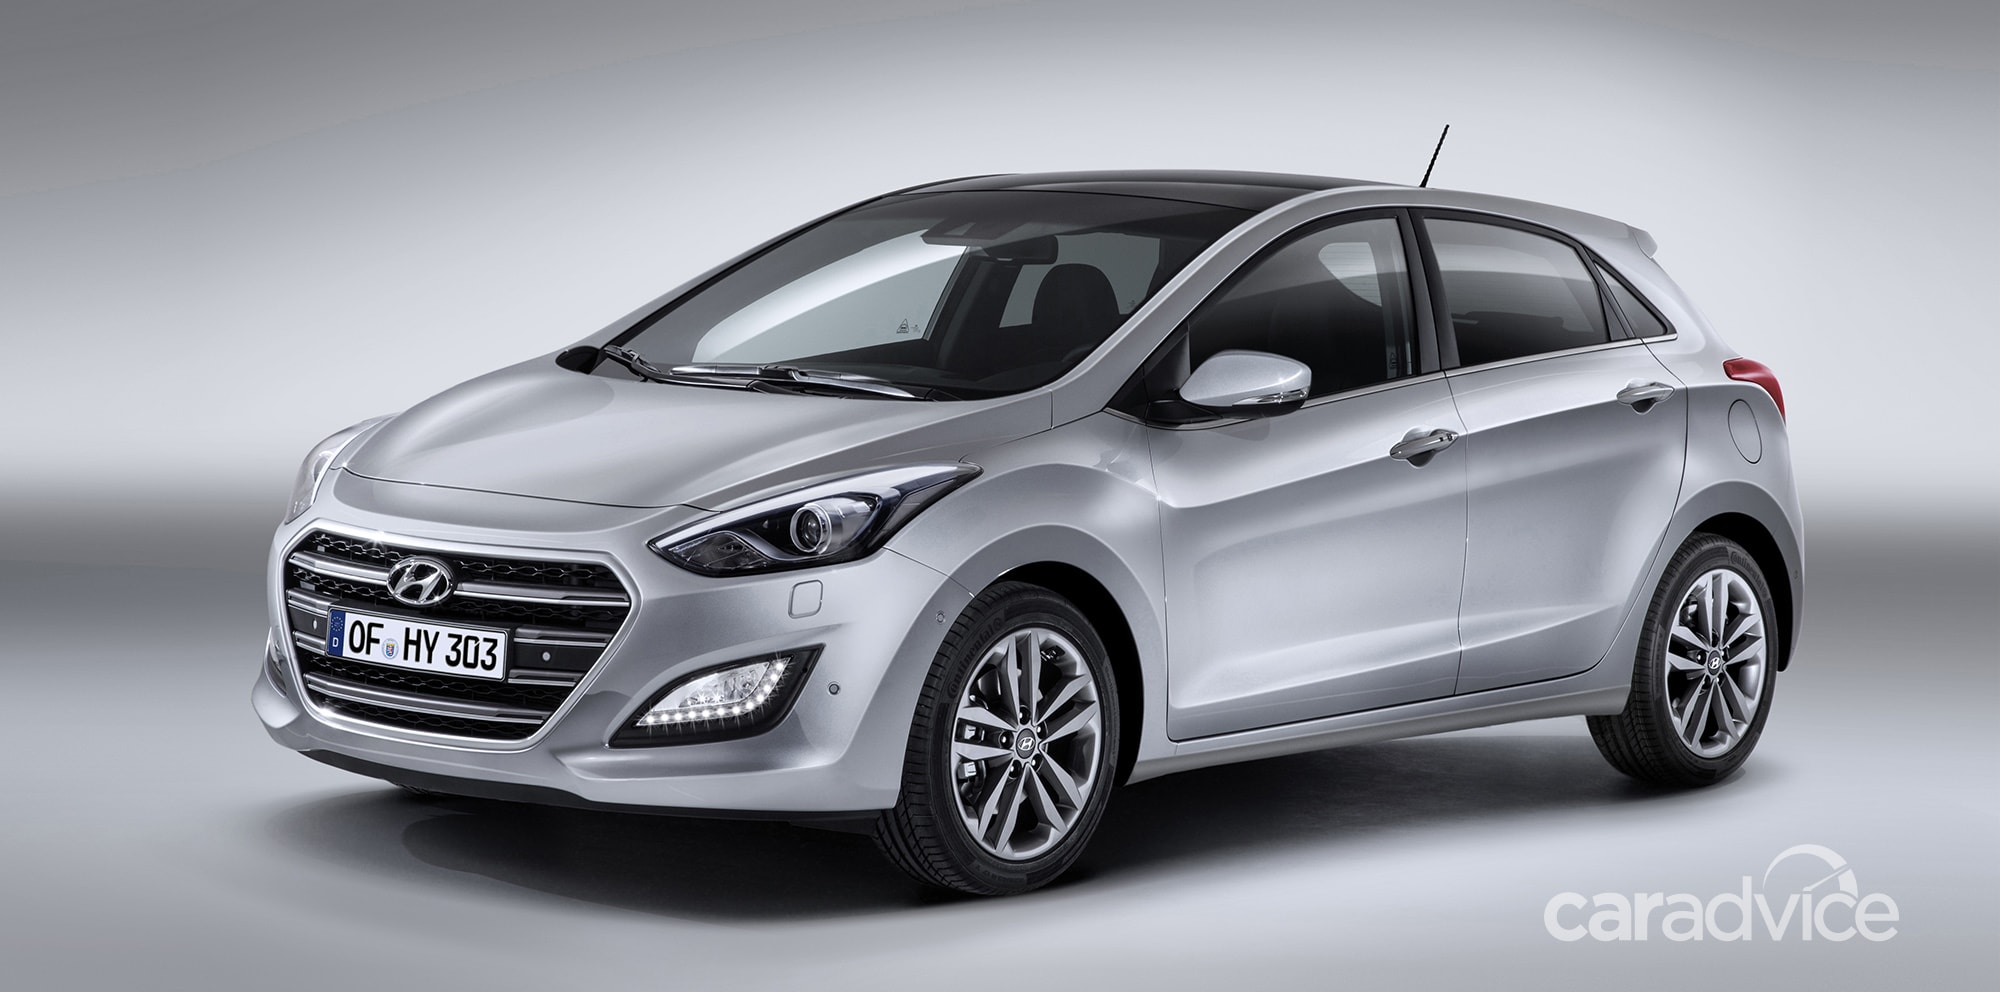 2015 Hyundai i30 facelift gains dualclutch transmission